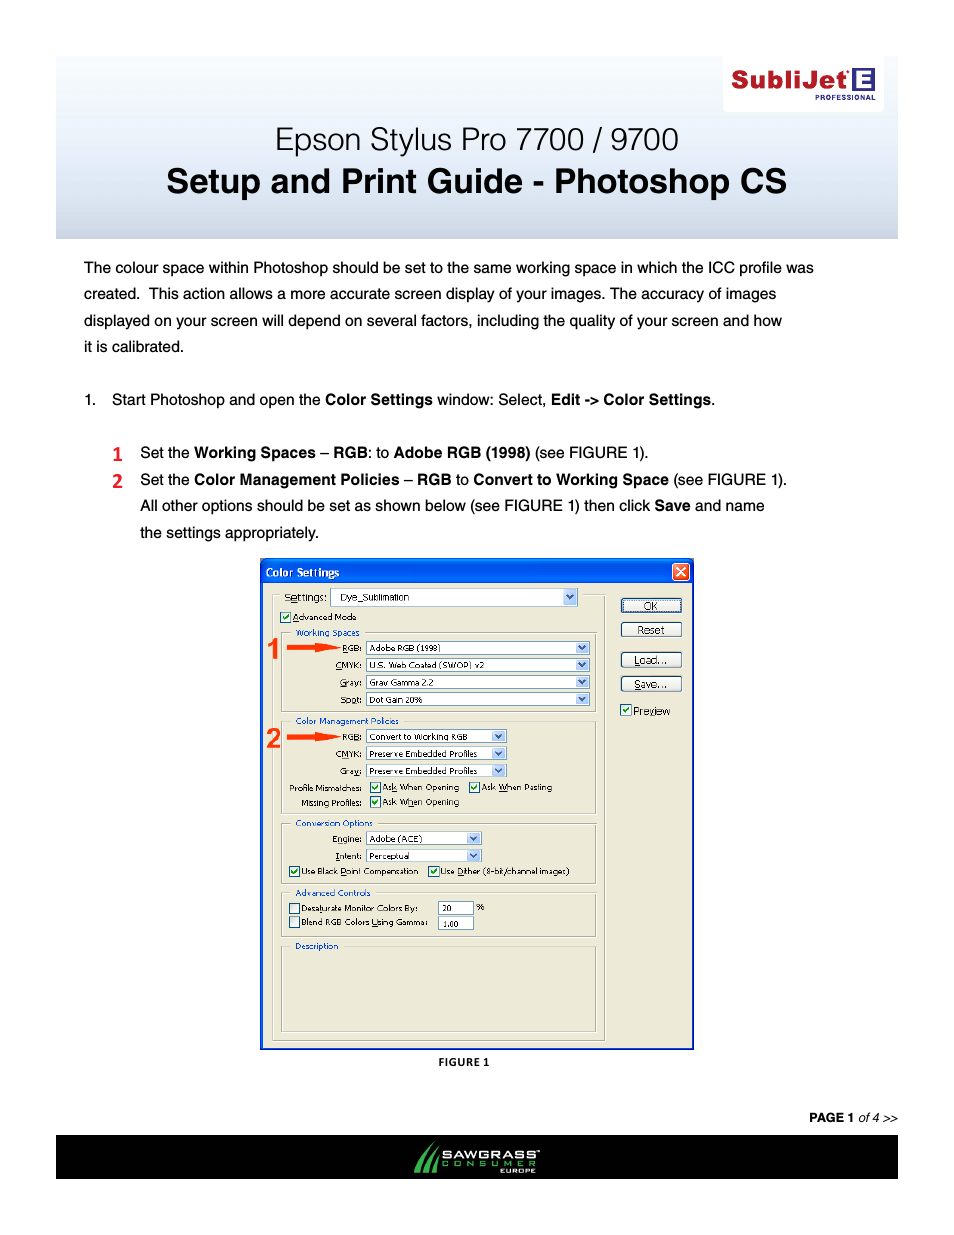 SubliJet E Epson Stylus Pro 7900 (Windows ICC Profile Setup): Print & Setup Guide Photoshop CS